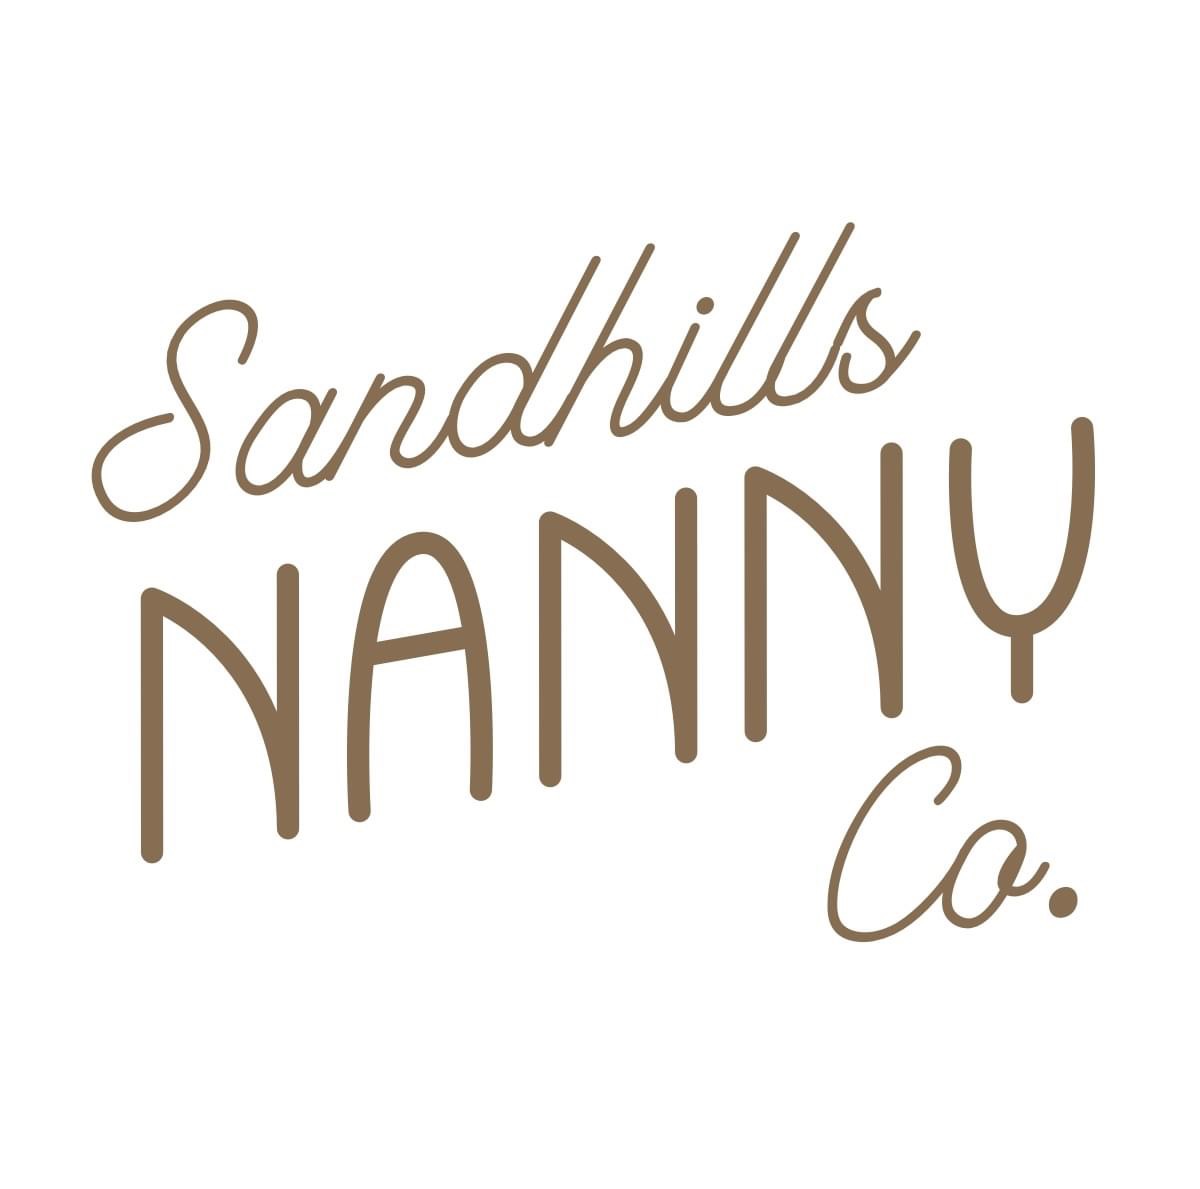 Sandhills Nanny Co. Families!